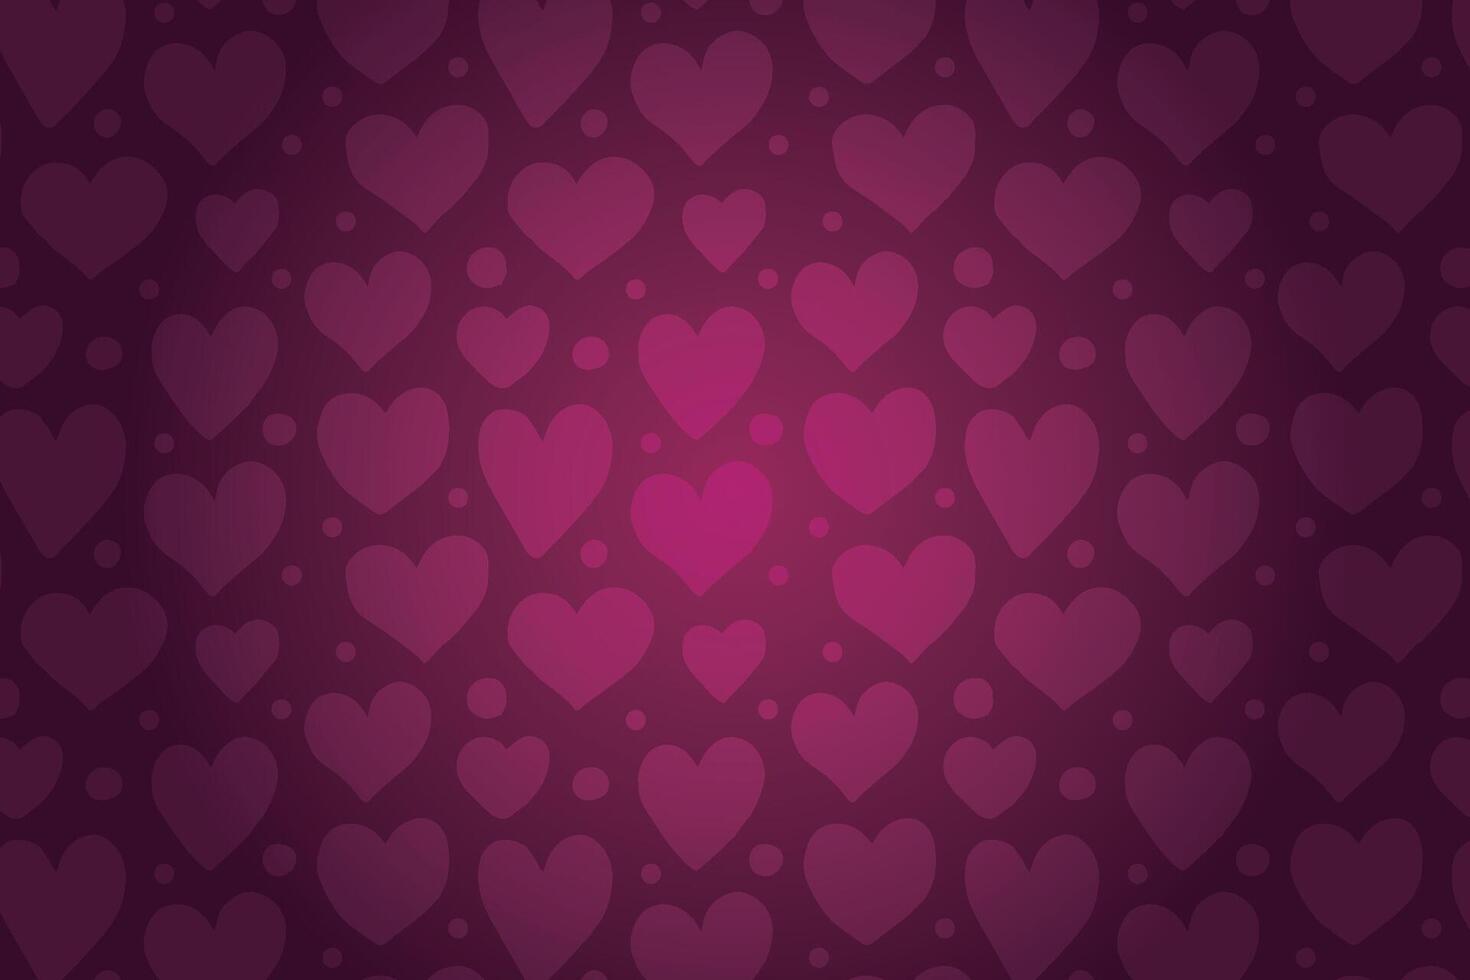 vector amor corazón patrón, vector mano dibujado San Valentín día modelo